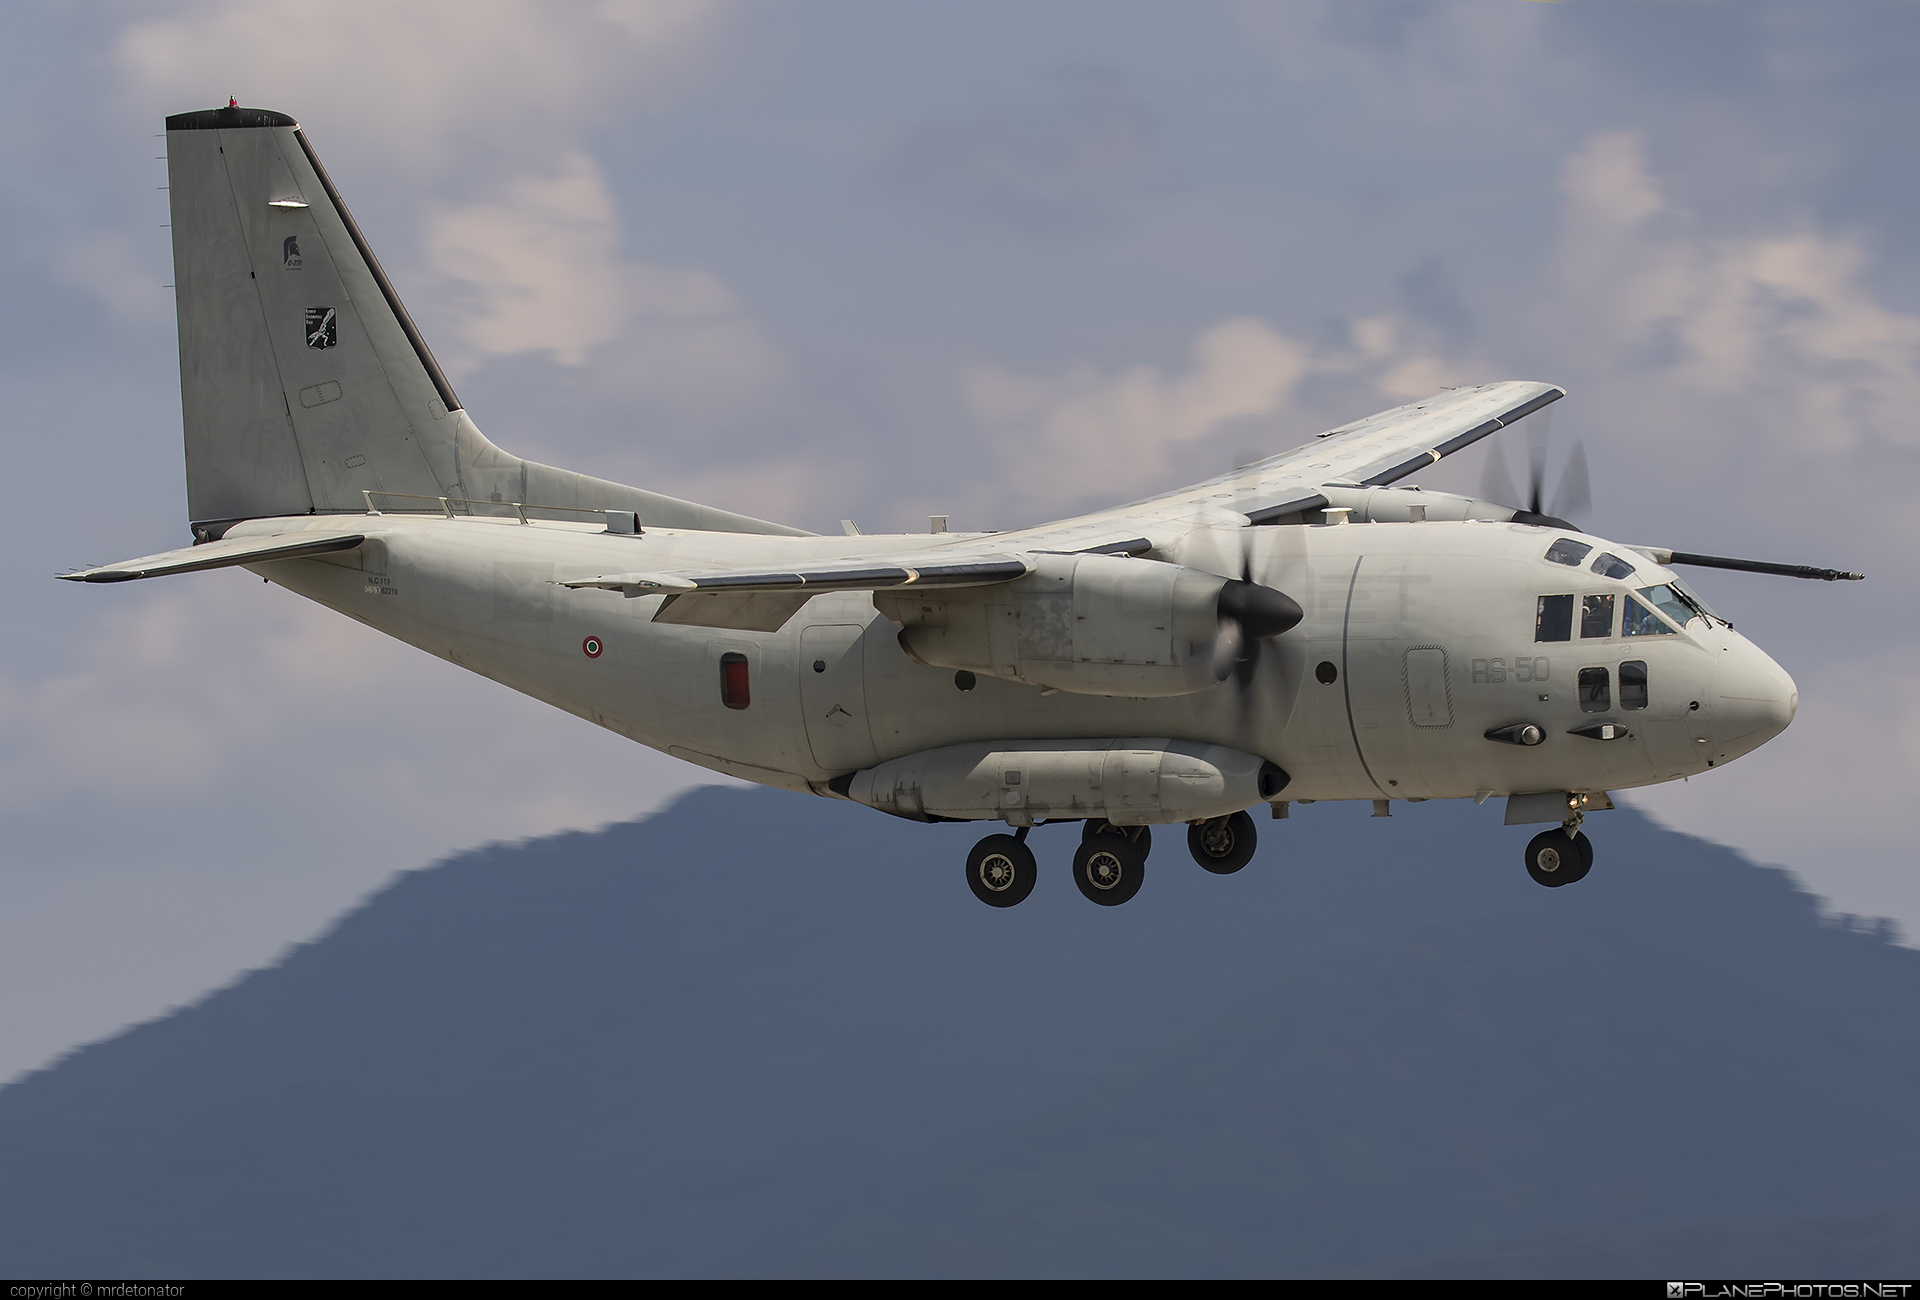 Alenia C-27J Spartan - CSX62219 operated by Aeronautica Militare (Italian Air Force) #AeronauticaMilitare #ItalianAirForce #alenia #aleniac27j #aleniac27jspartan #aleniaspartan #c27j #c27jspartan #c27spartan #siaf2021